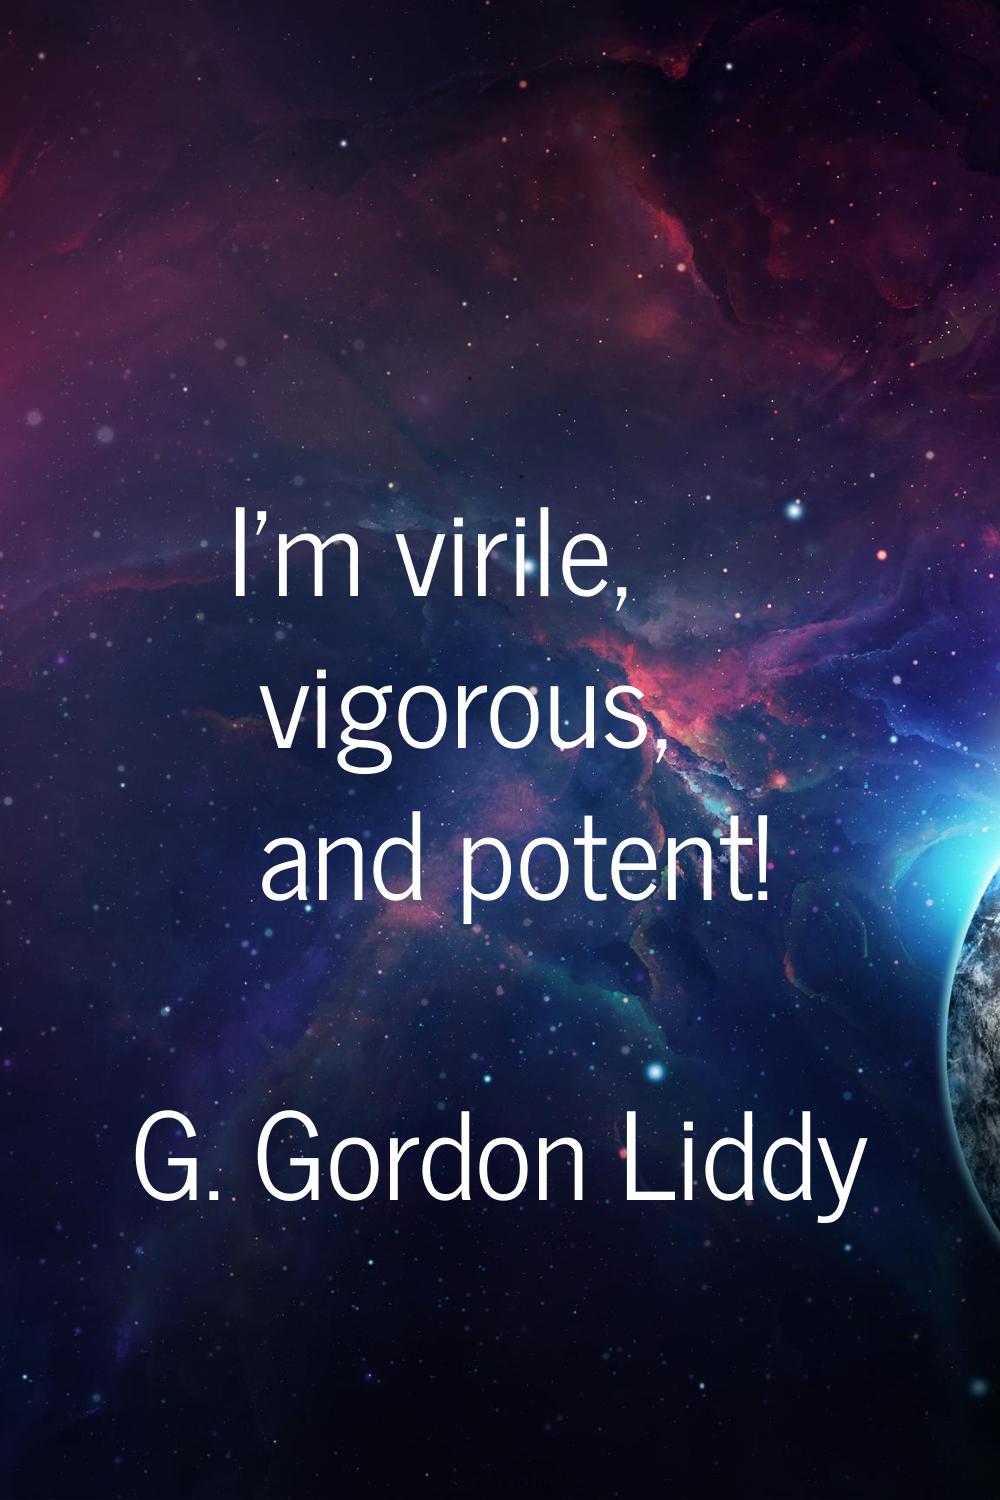 I'm virile, vigorous, and potent!